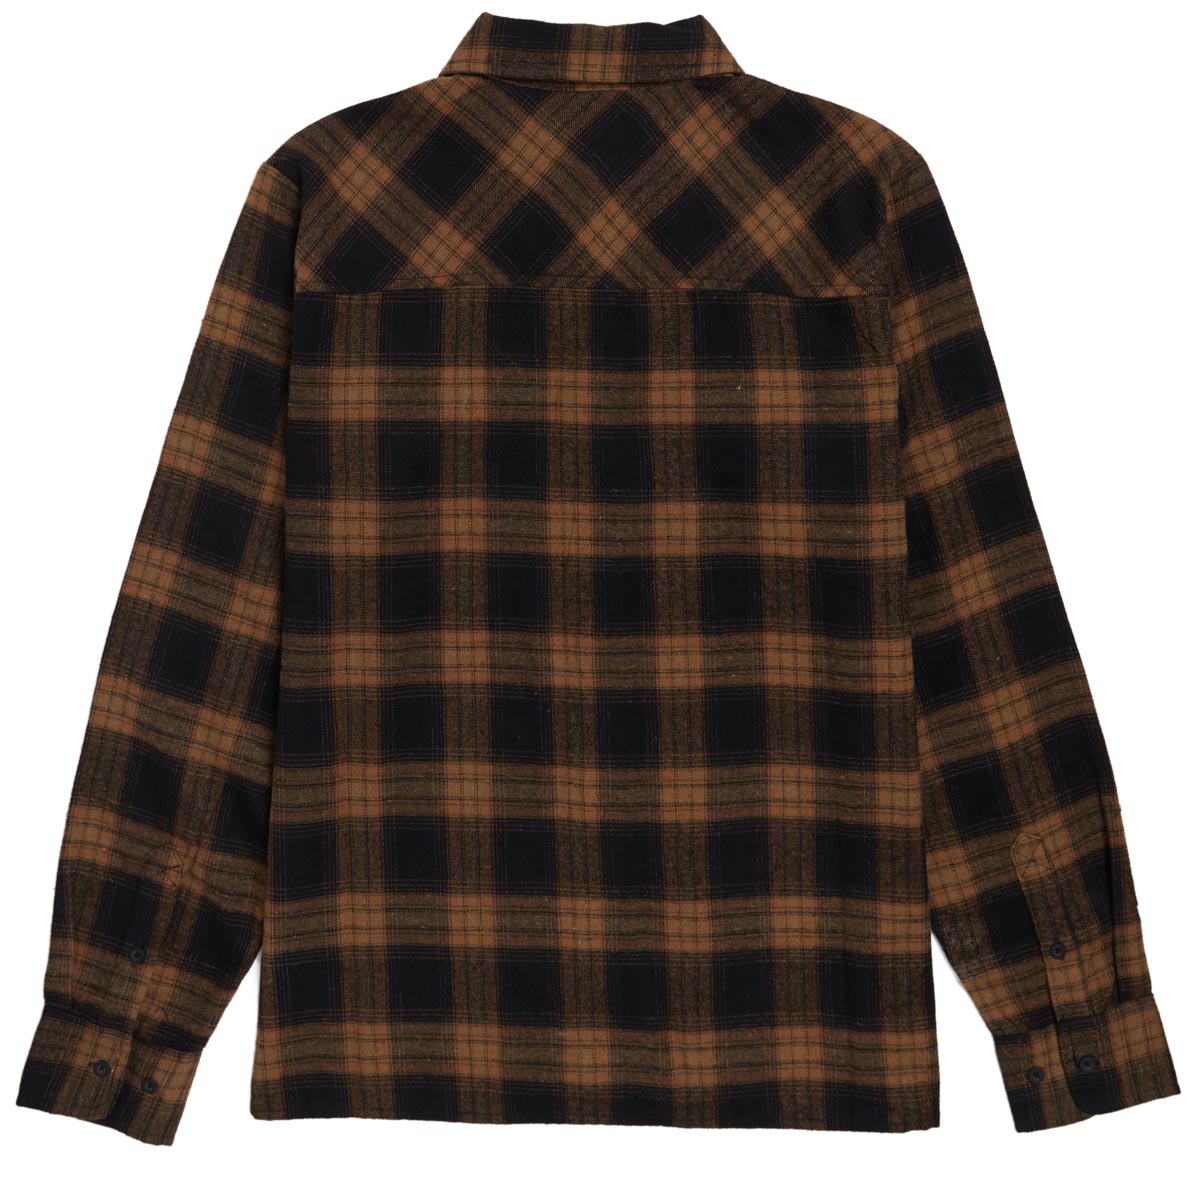 Santa Cruz Stone Flannel Long Sleeve Shirt - Black/Brown image 2